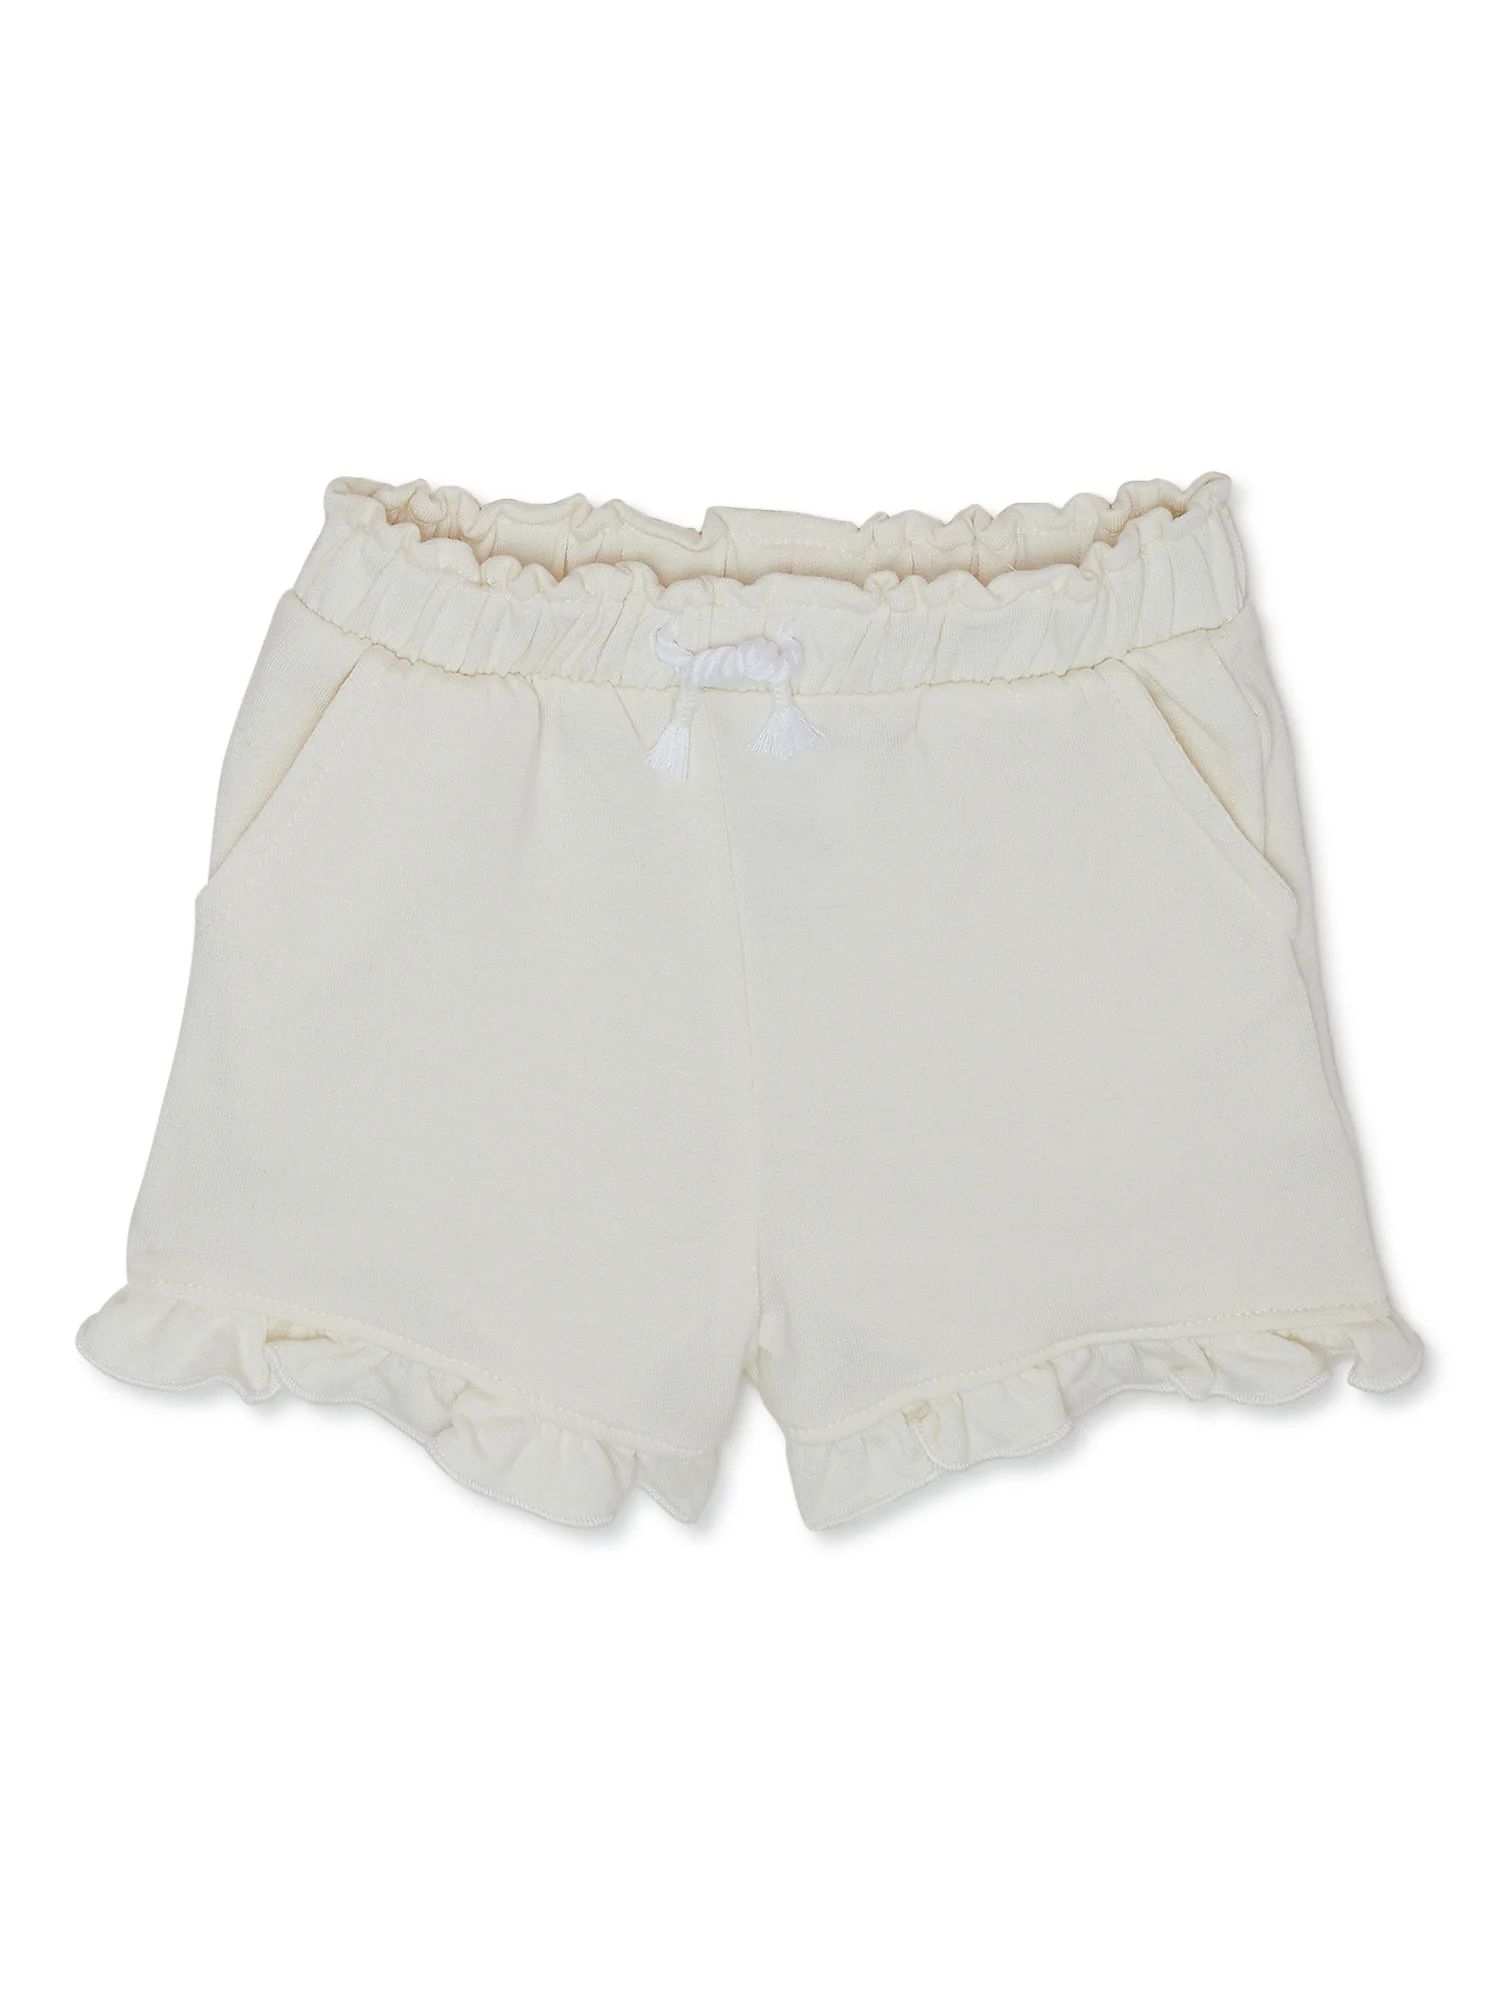 Garanimals Baby Girl French Terry Ruffle Shorts, Sizes 0-24 Months | Walmart (US)